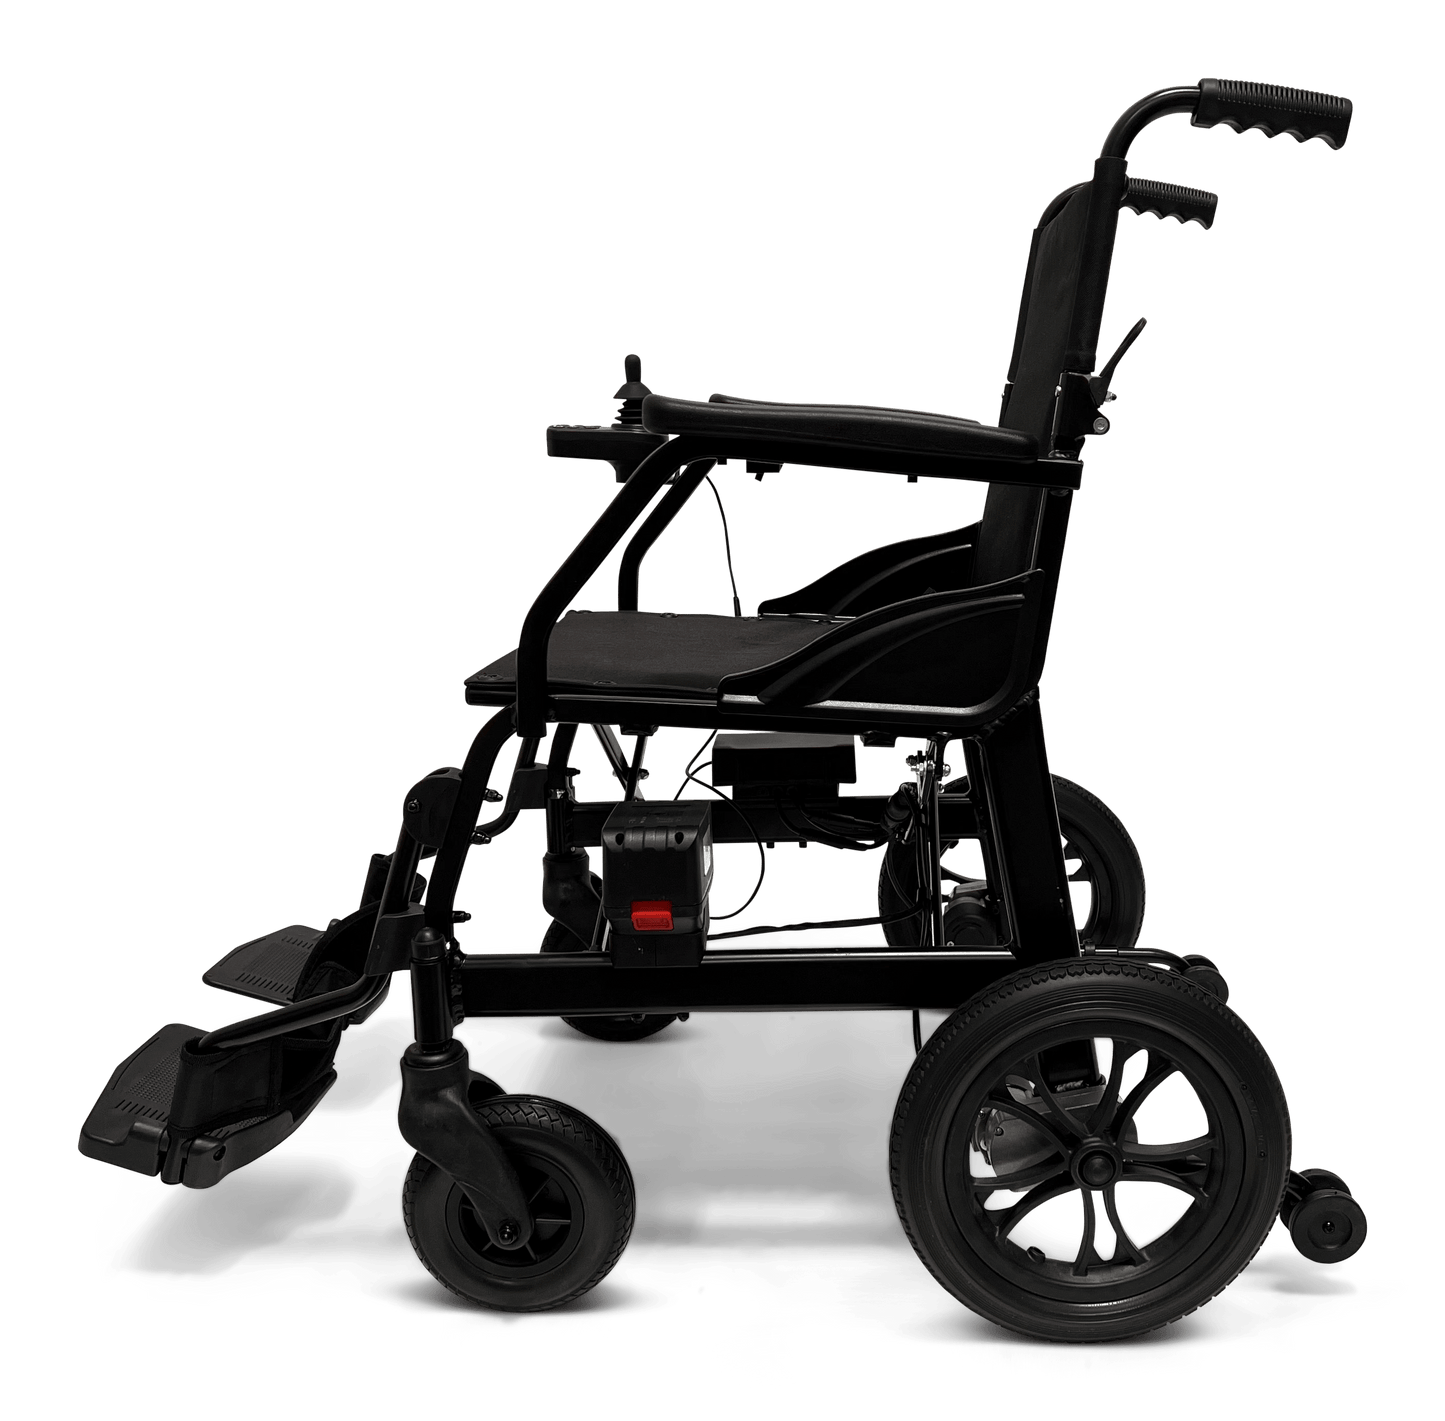 Comfygo X-Lite Ulta Lightweight Folding Travel Electric Wheelchair